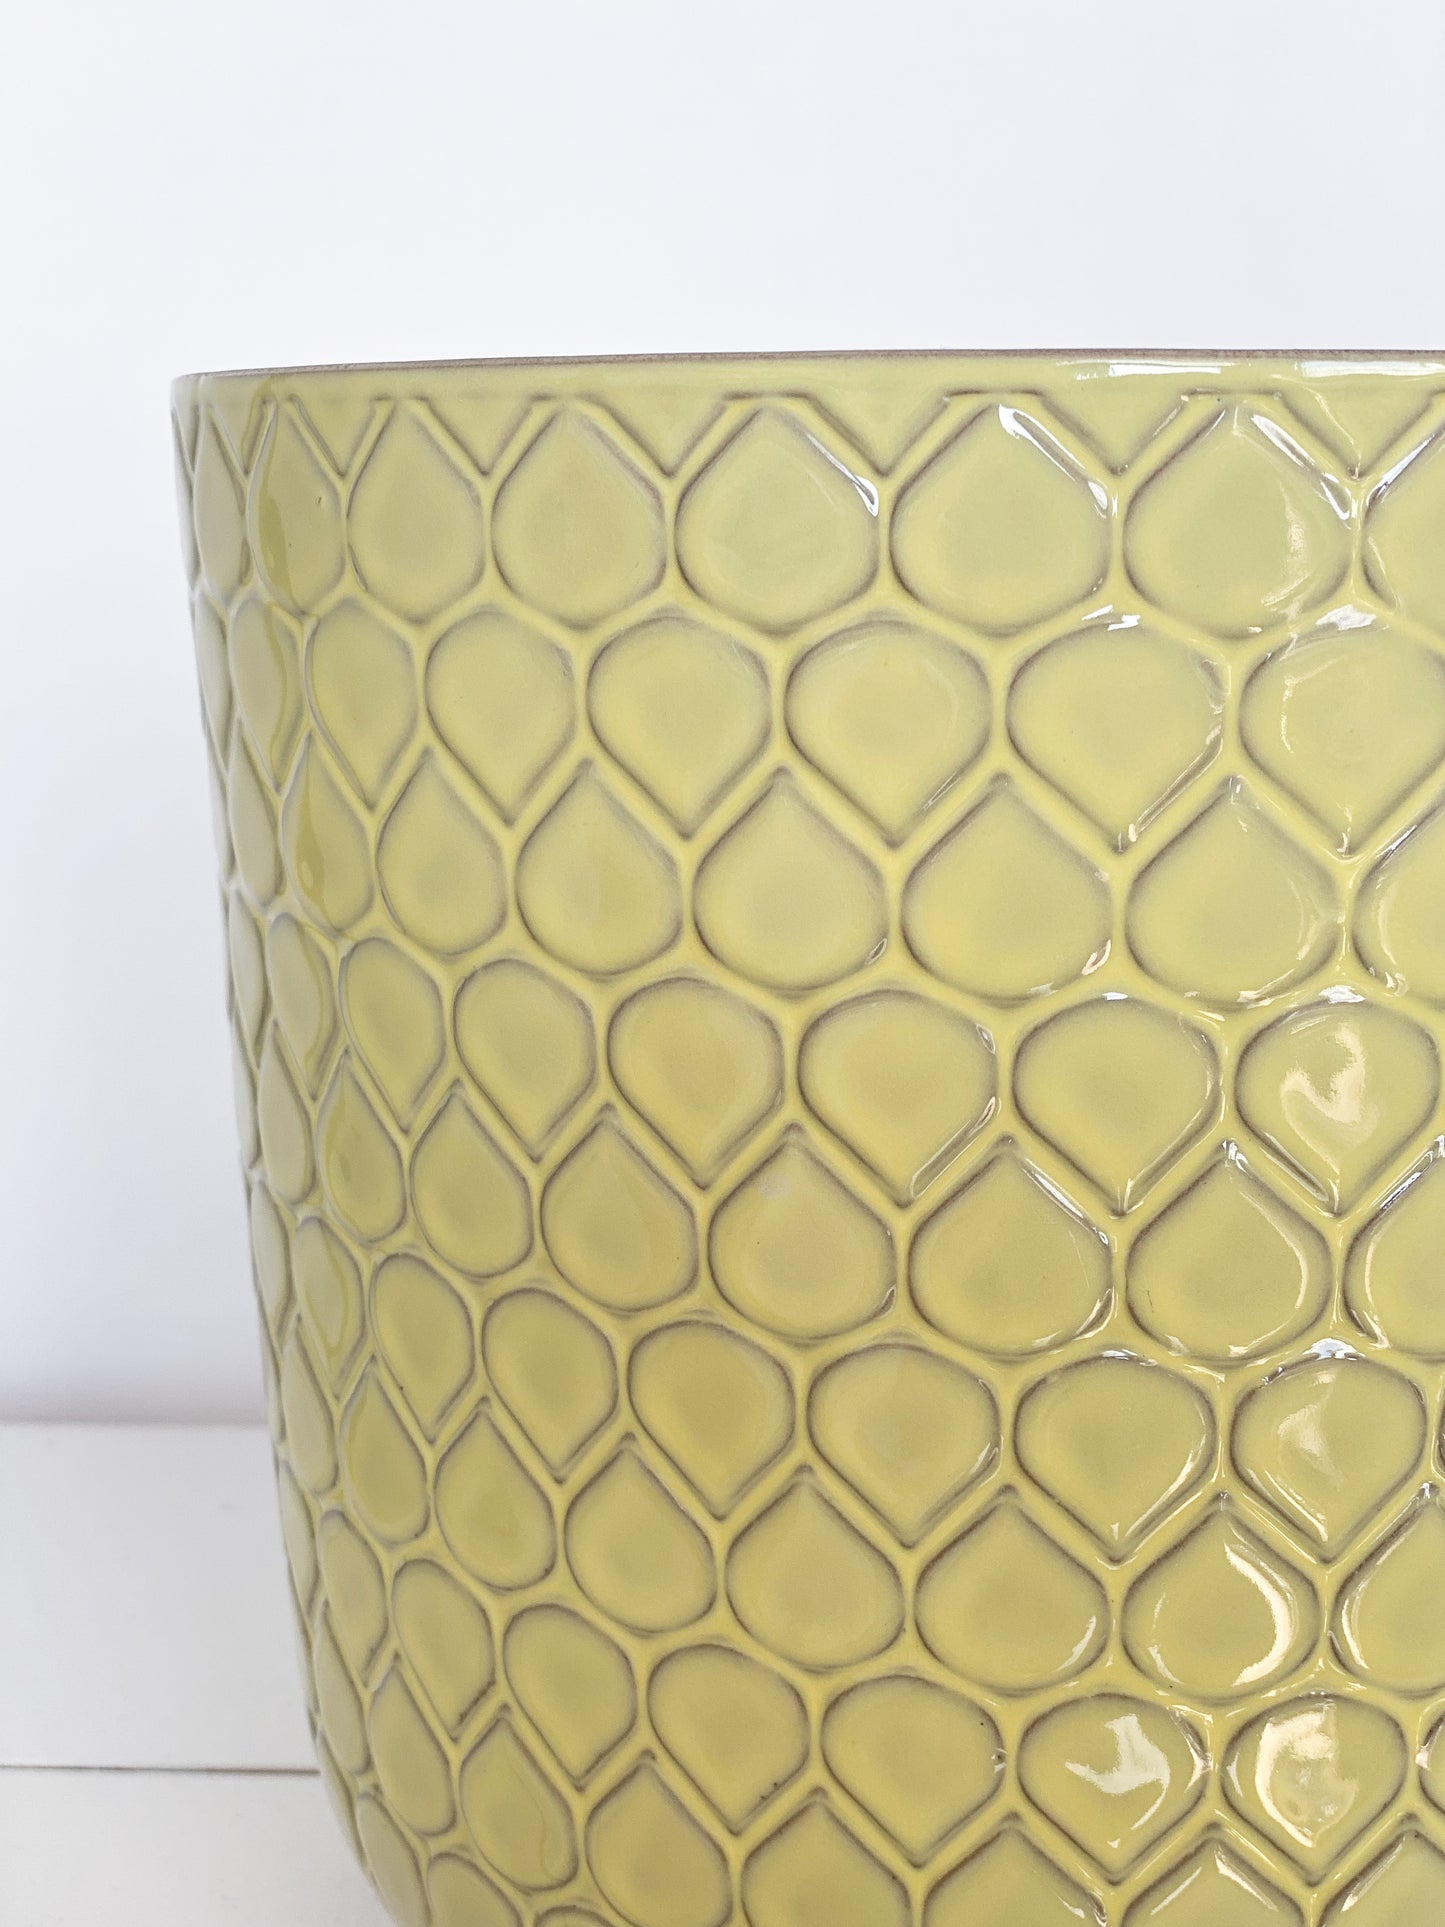 10” Soft Yellow Ceramic Pot